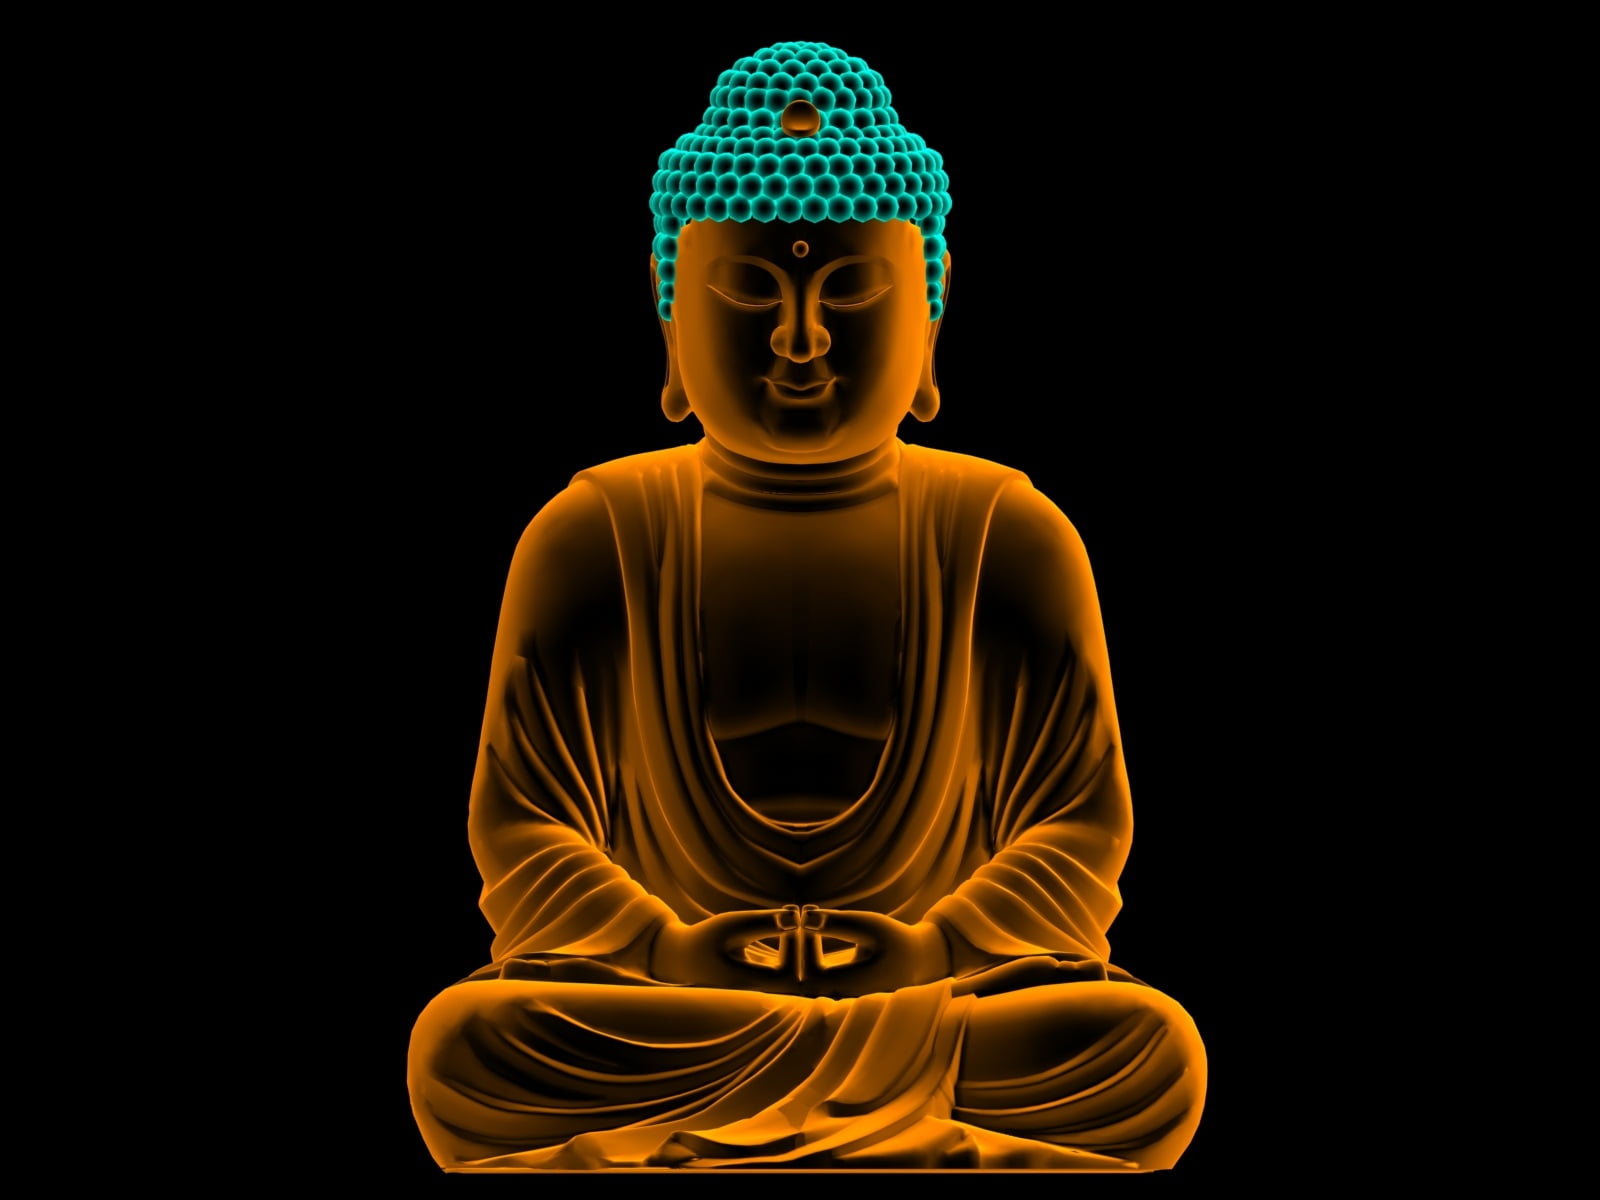 Lord Buddha Design, brown Buddha illustration, God, religion